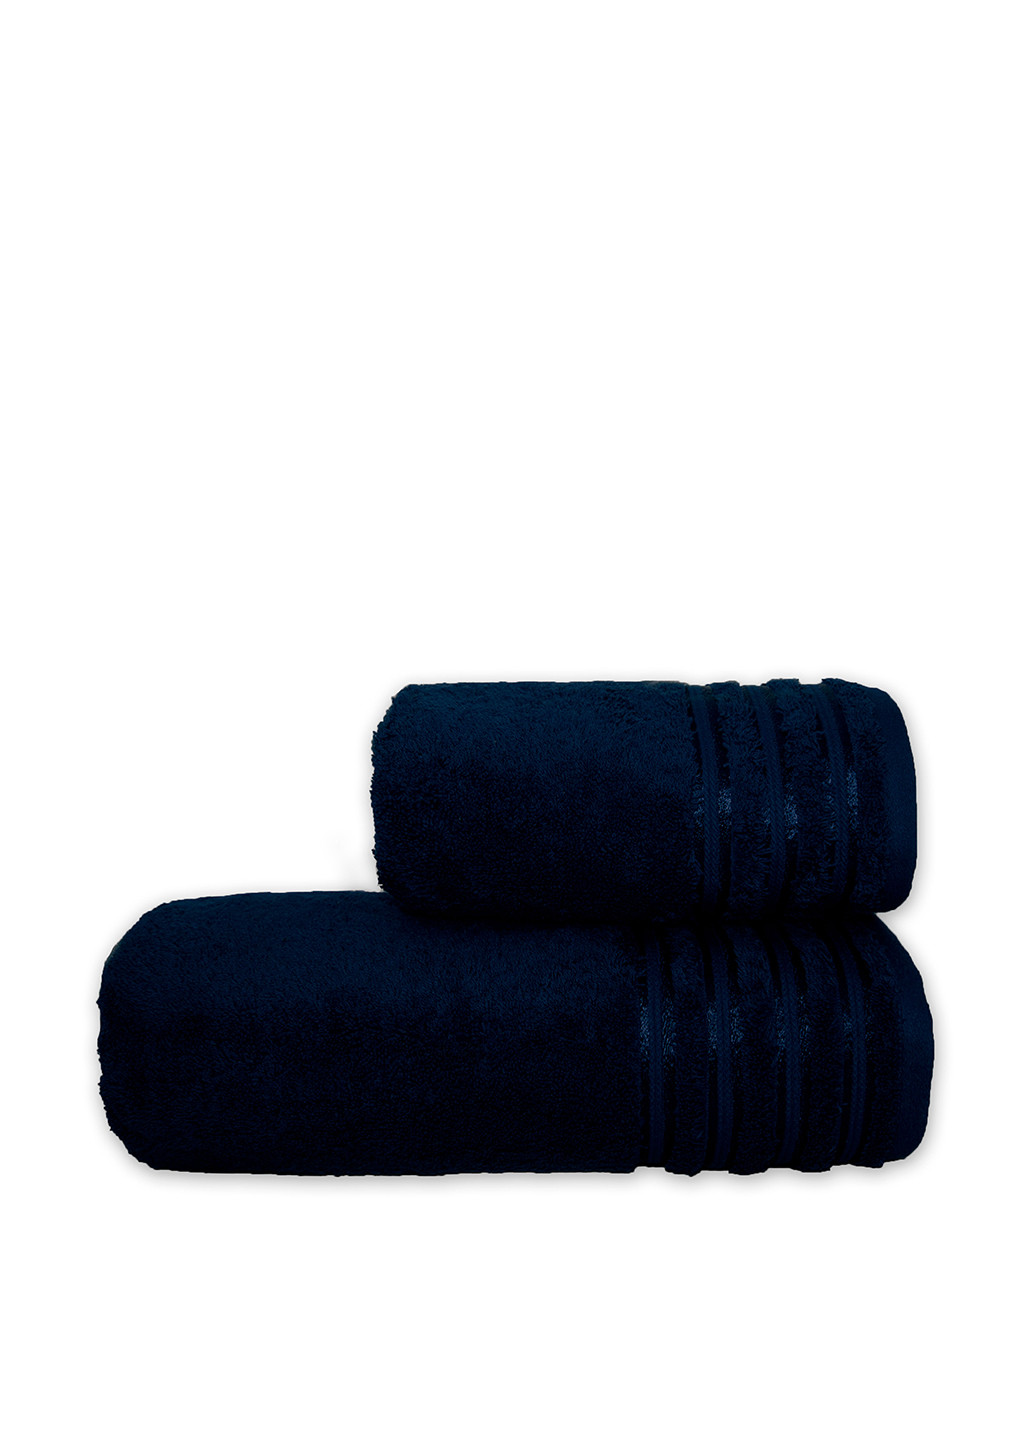 Vip Hotel Collection полотенце, 76х142 см однотонный синий производство - Турция